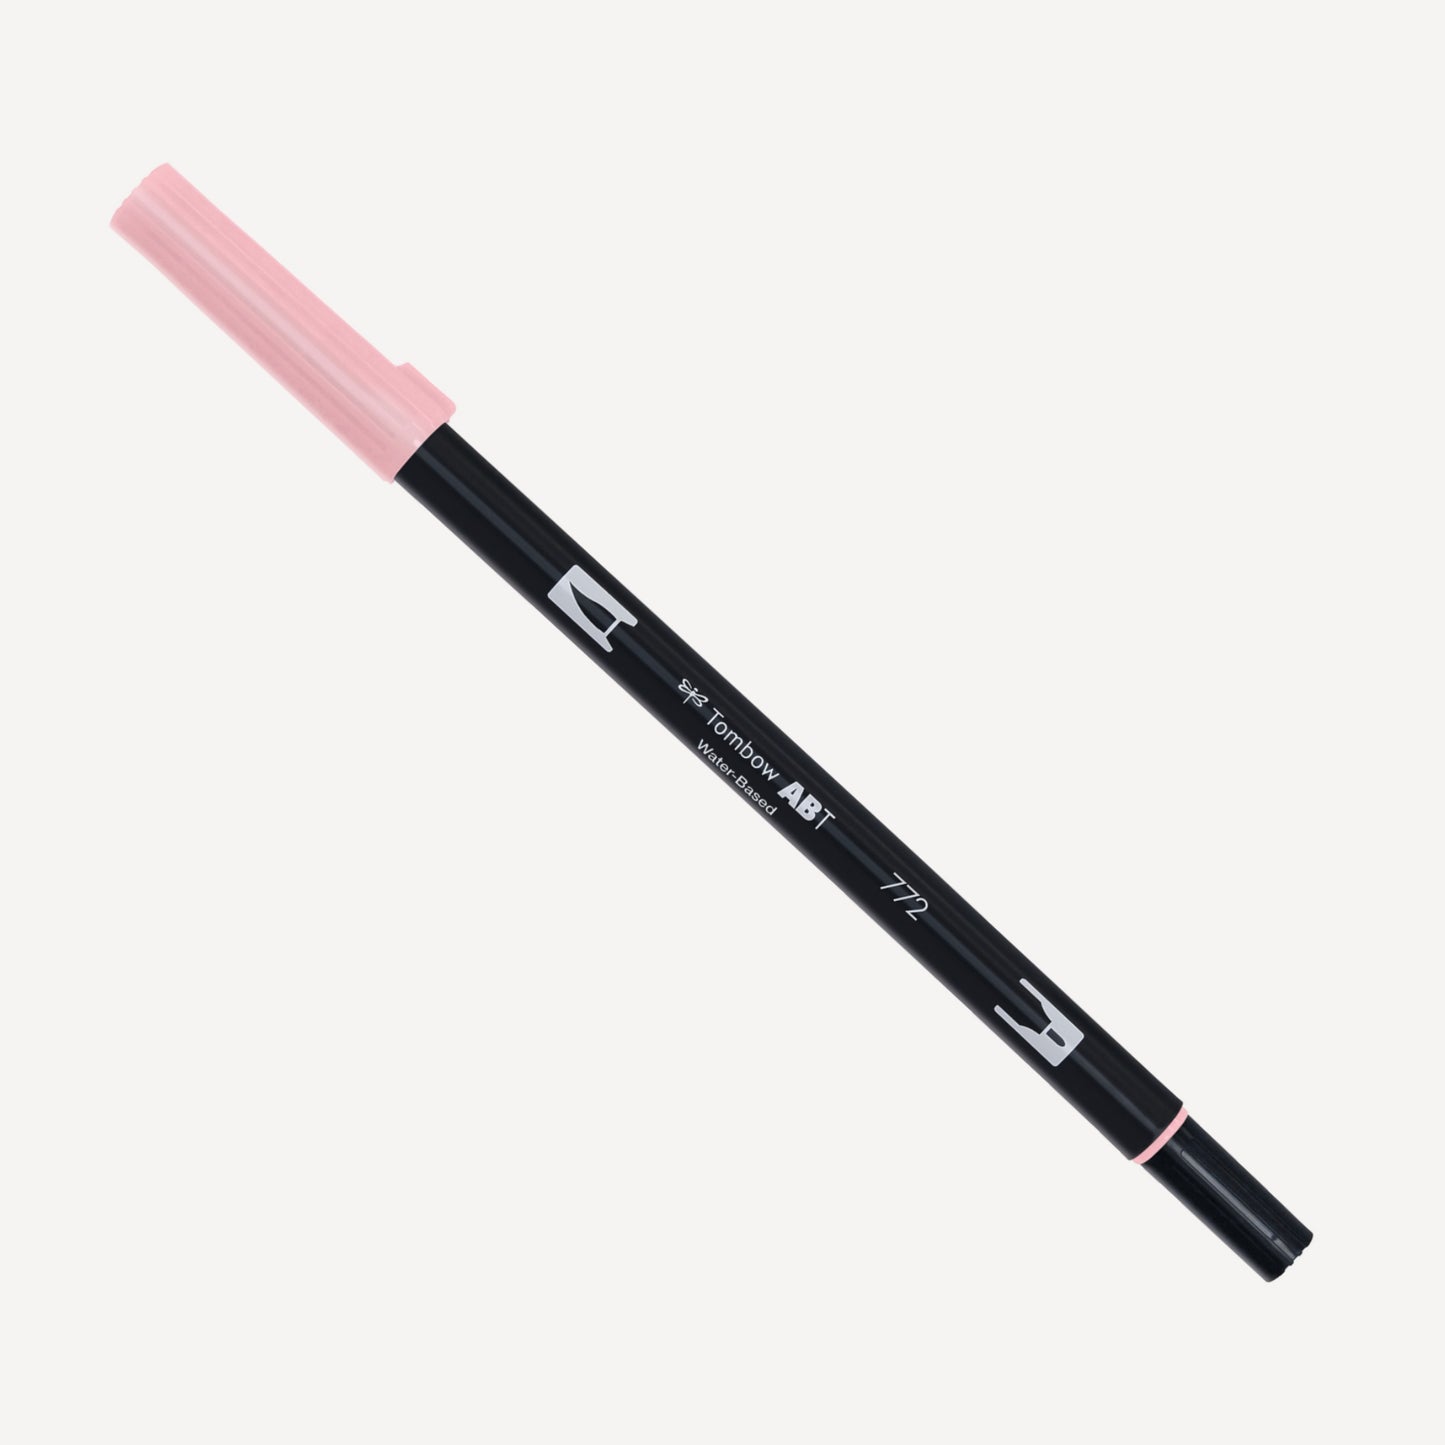 Tombow Dual Brush Pen Pink